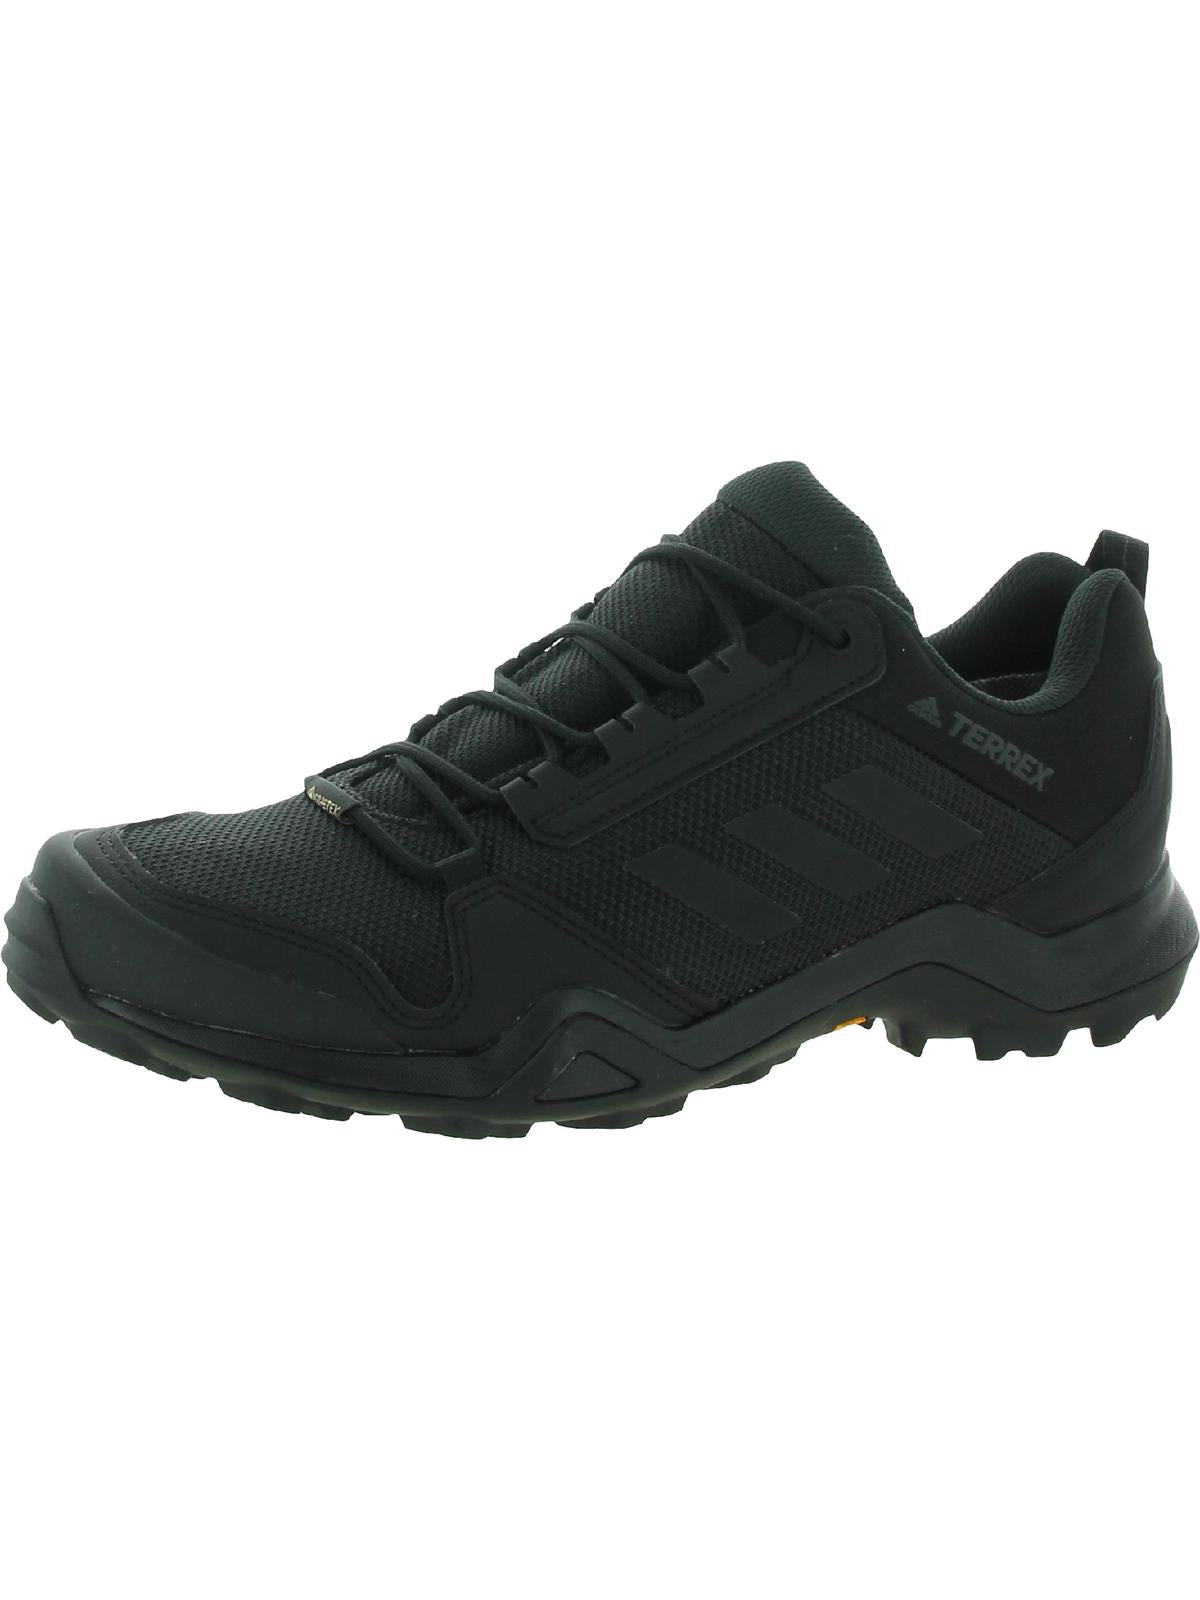 ADIDAS ORIGINALS Terrex AX3 GTX Mens Comfort Insole Rugged Hiking Shoes